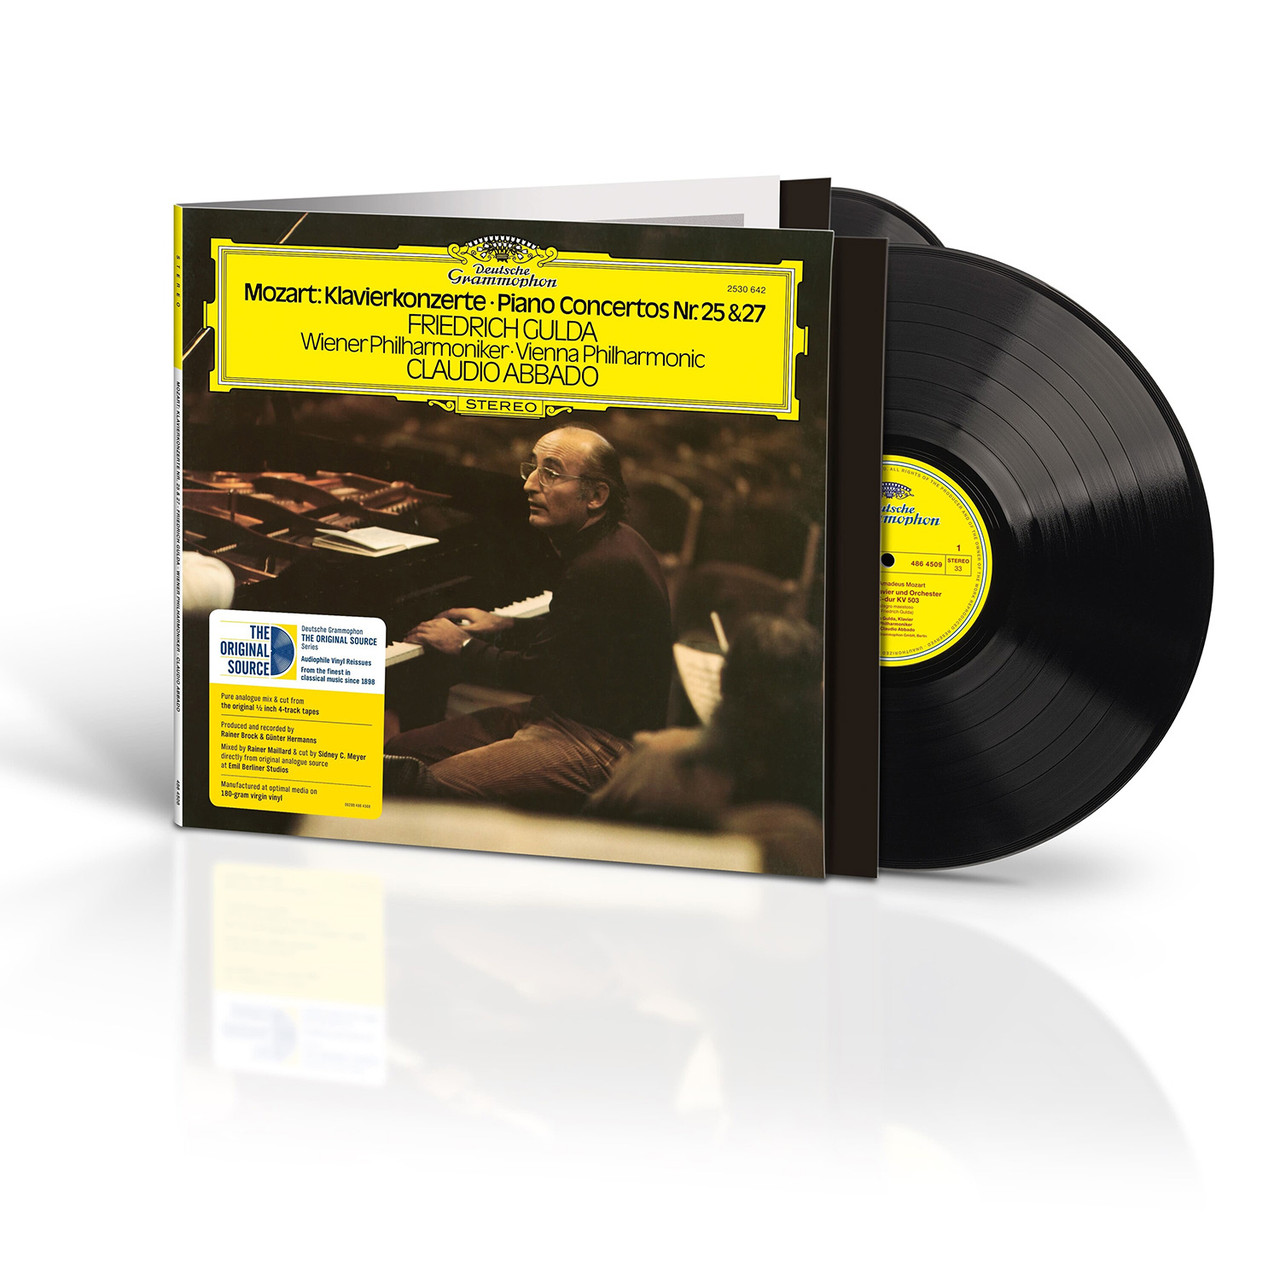 mozart piano concertos, deutsche grammophon, original source series, Friederich Gulda, Claudio Abbado